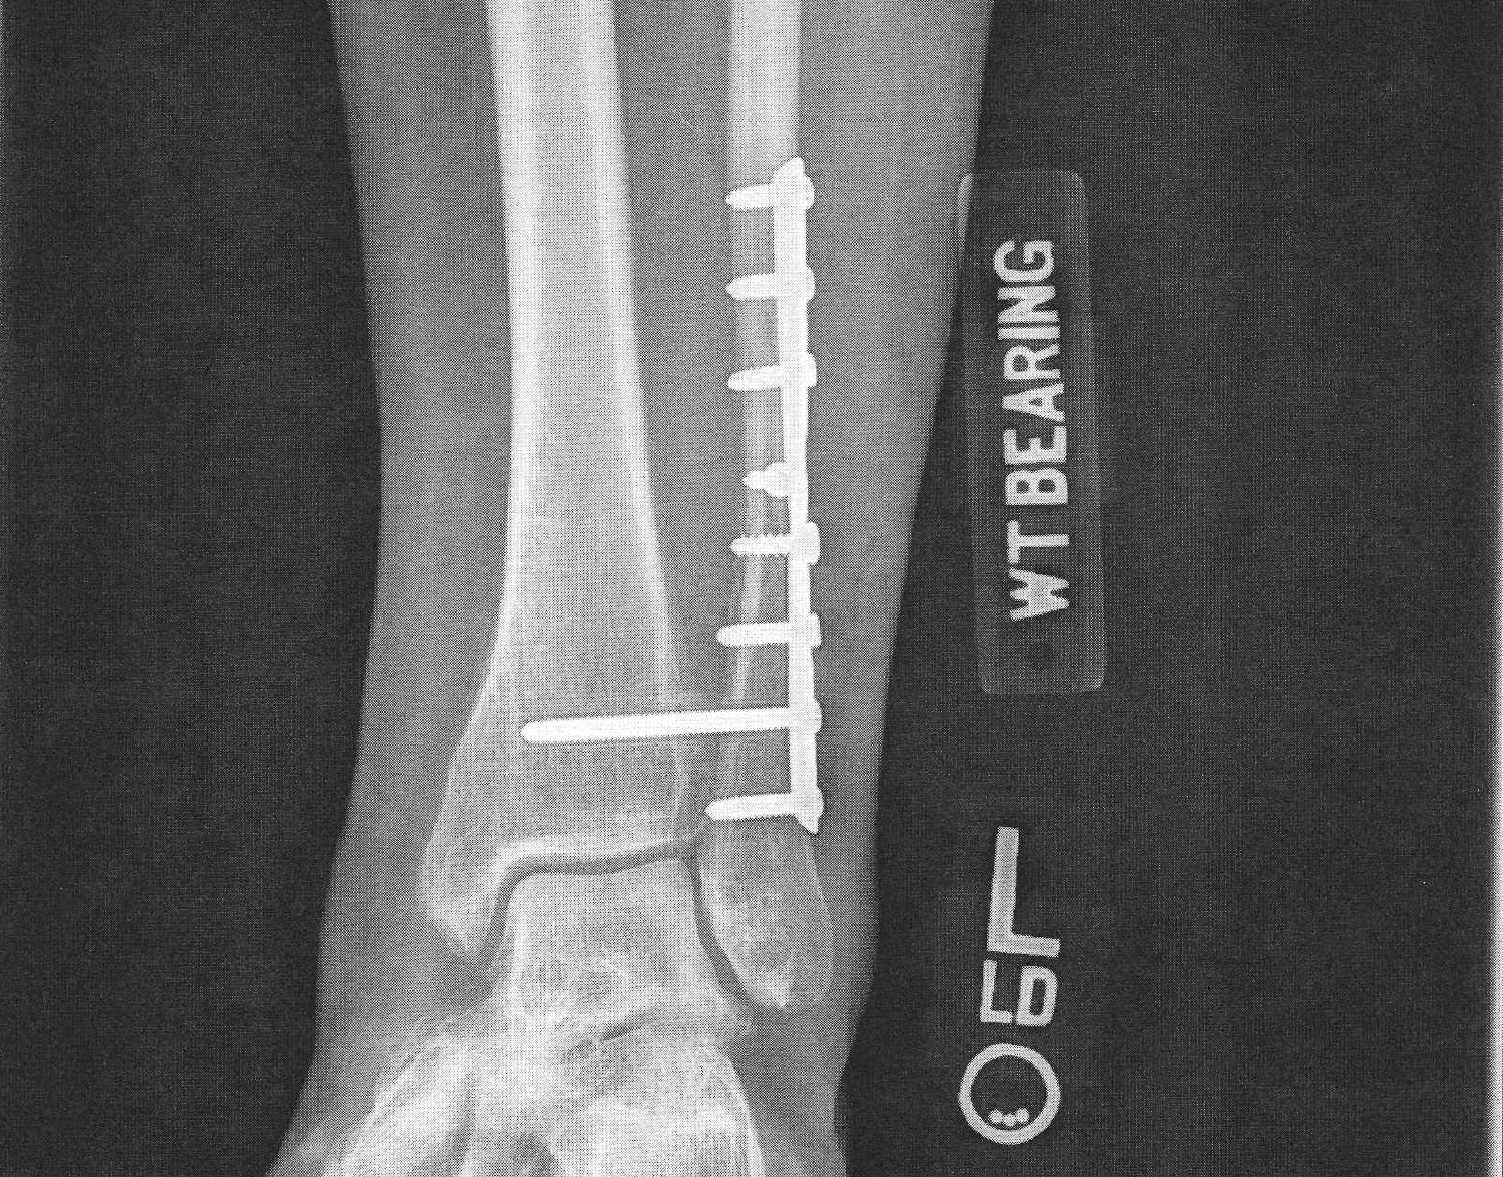 plate and 8 screws inside a fibula (lower leg bone)